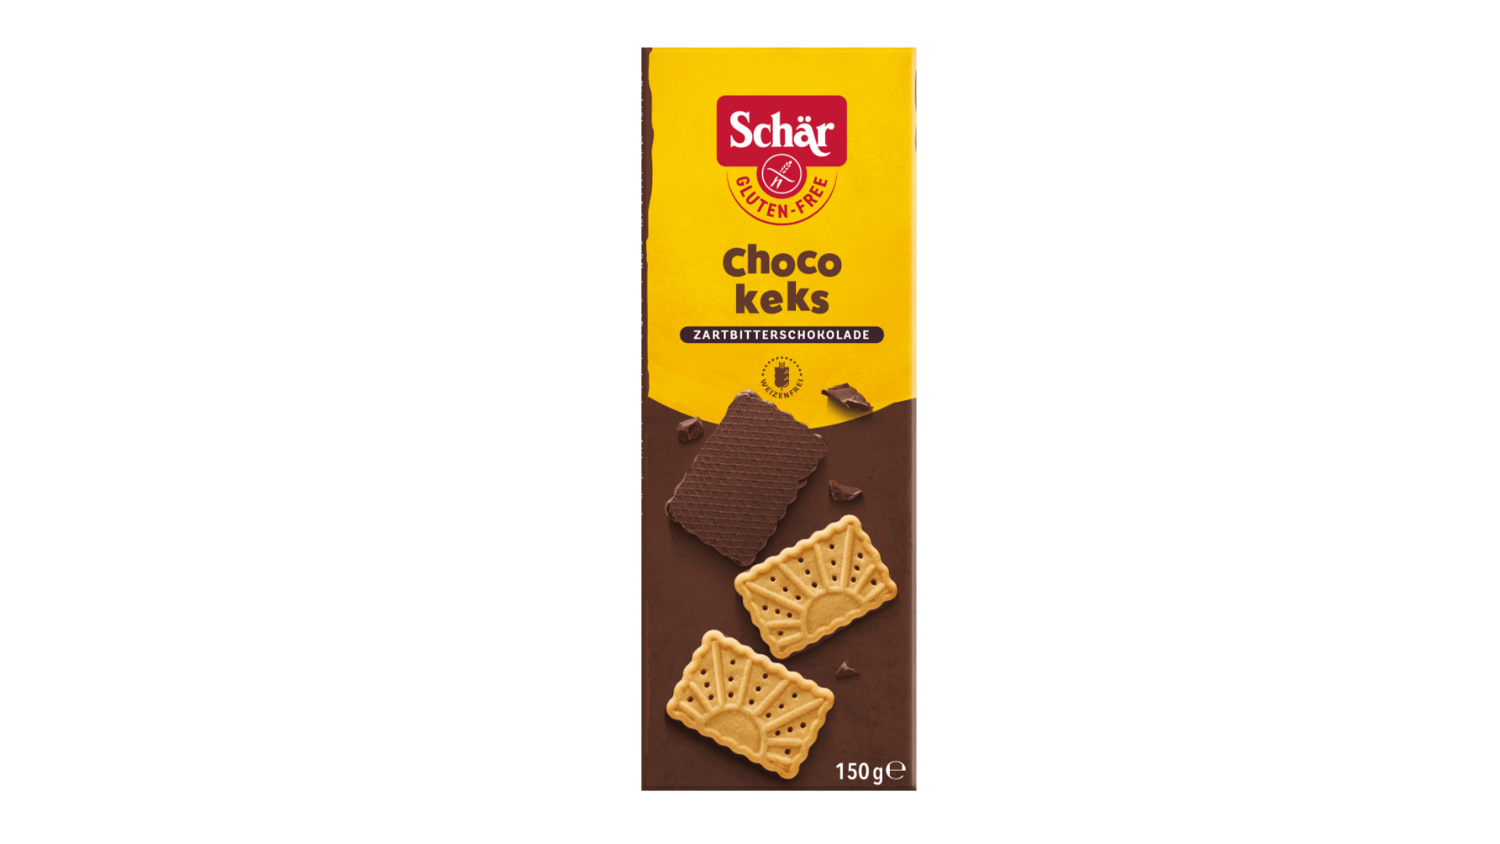 Schar Choco keks